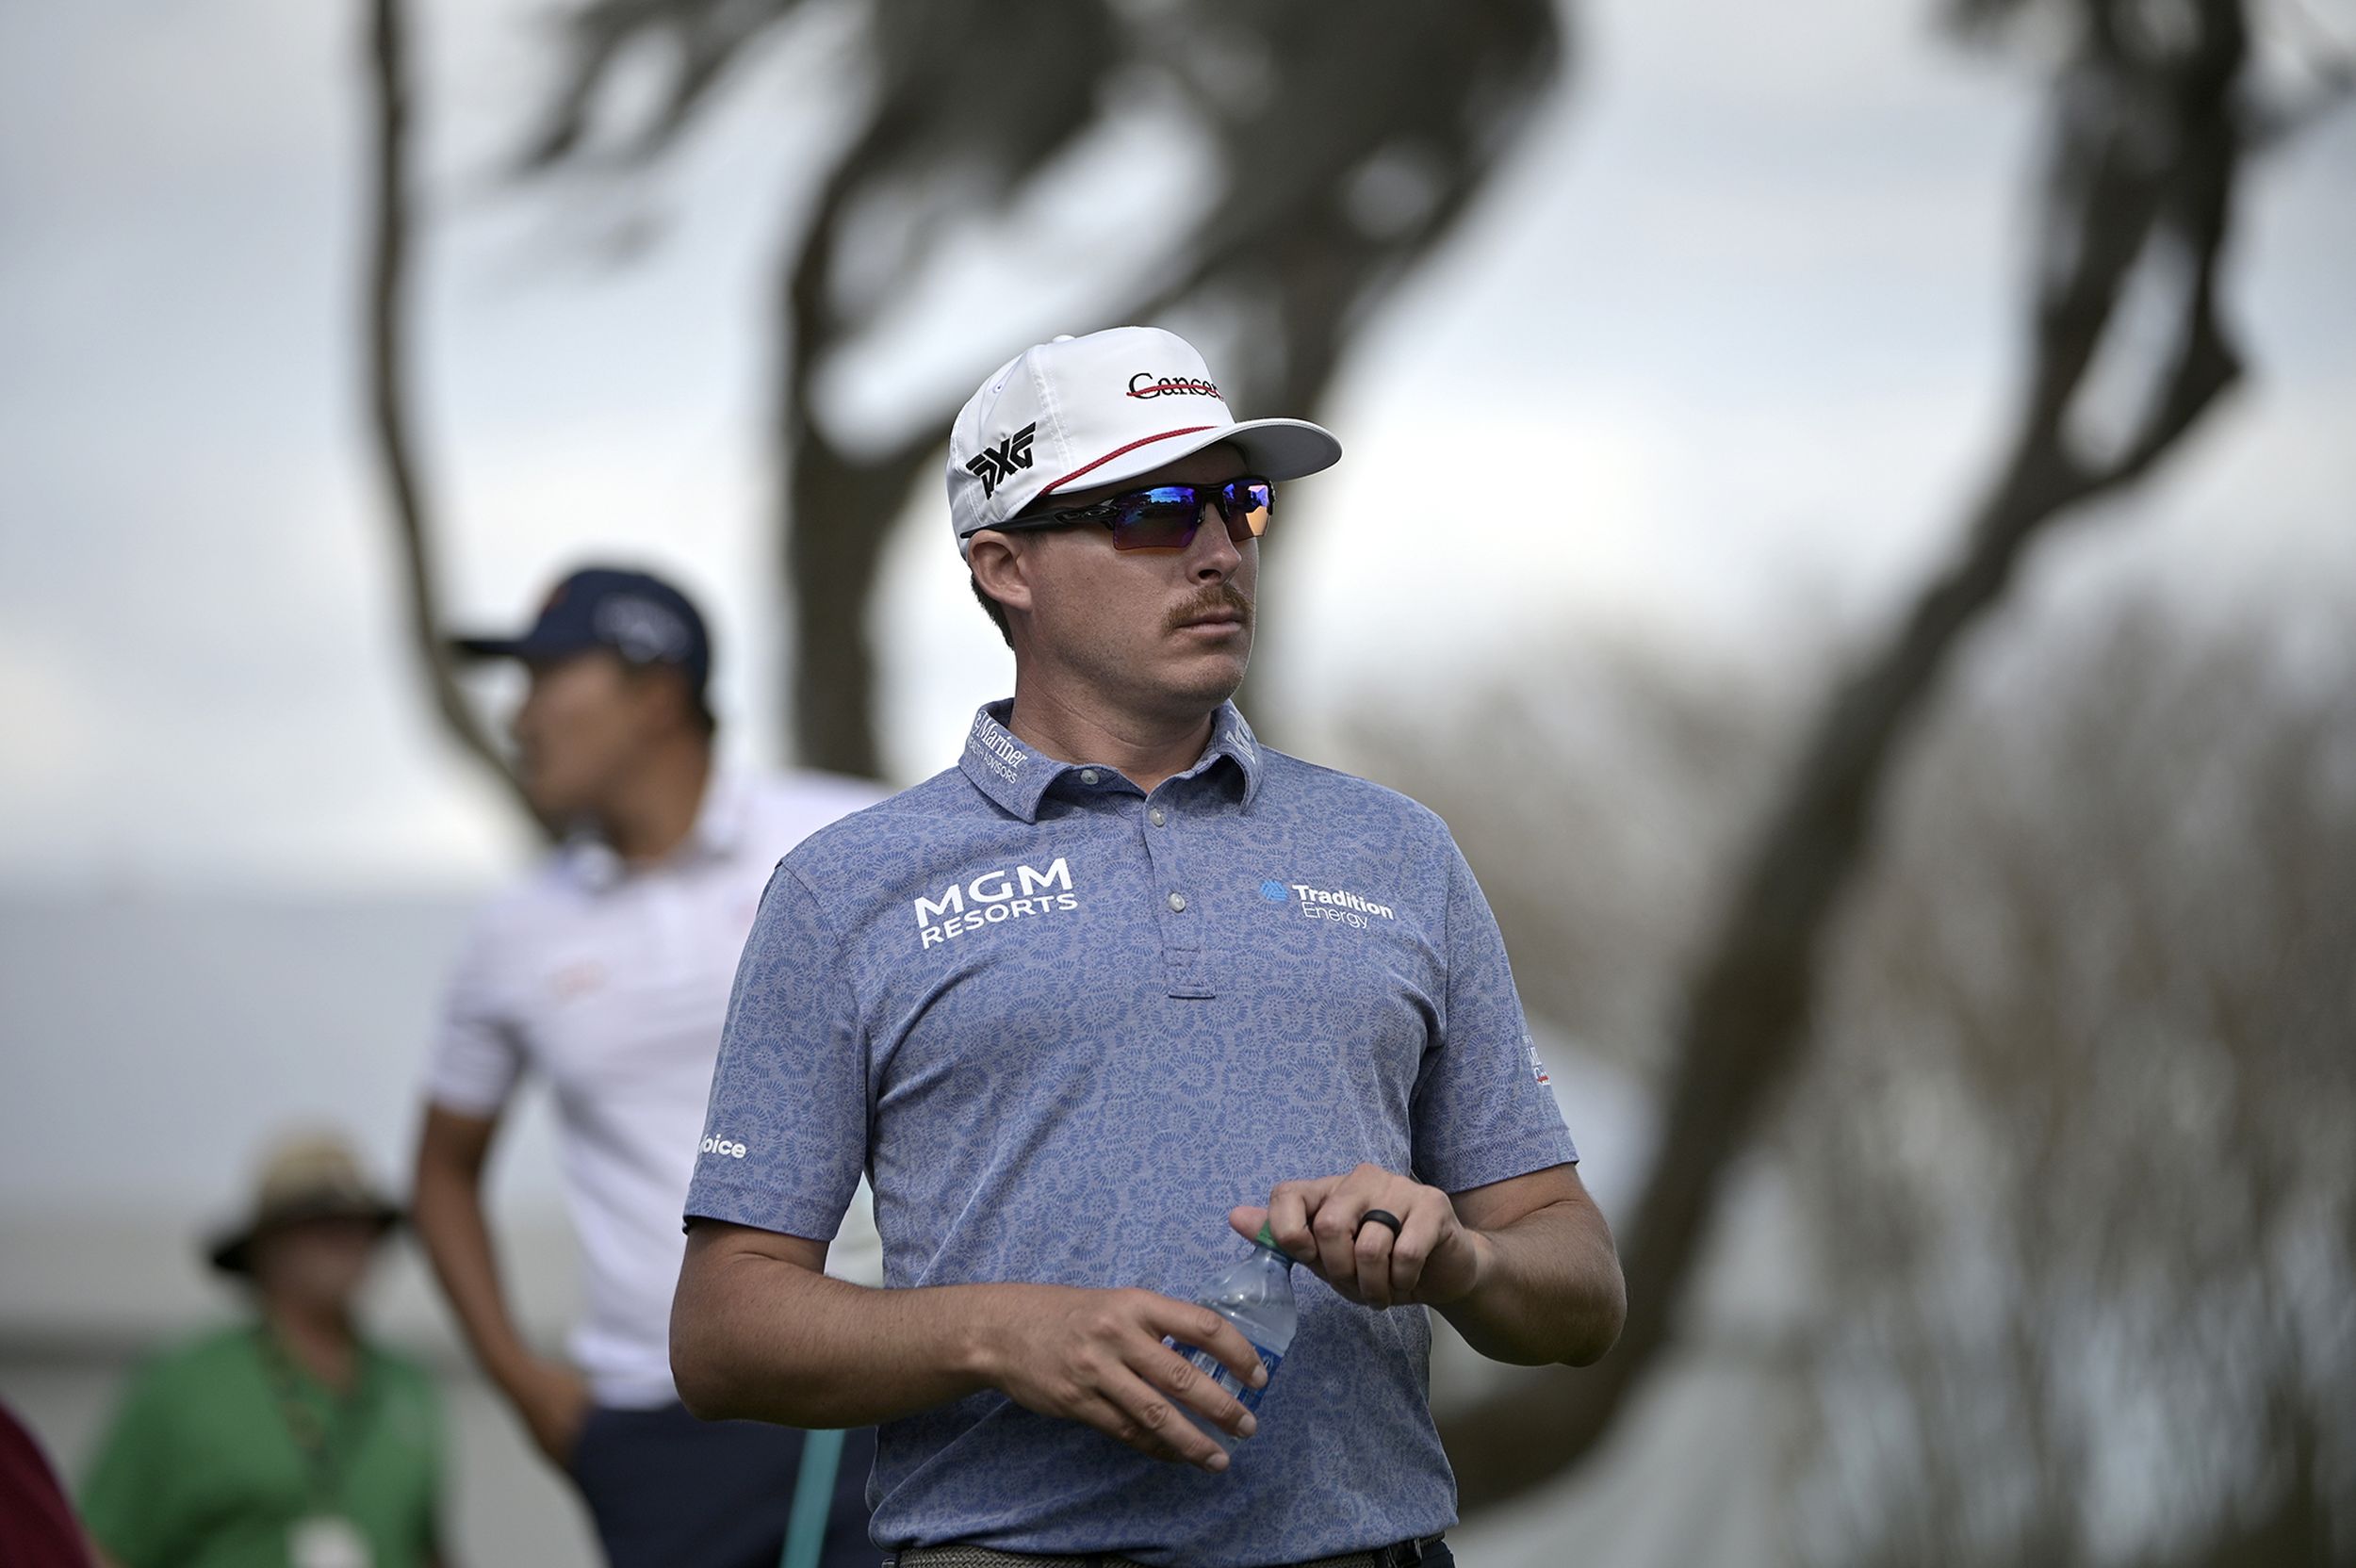 Clarkston native Joel Dahmen wins at windy Punta Cana for 1st PGA Tour